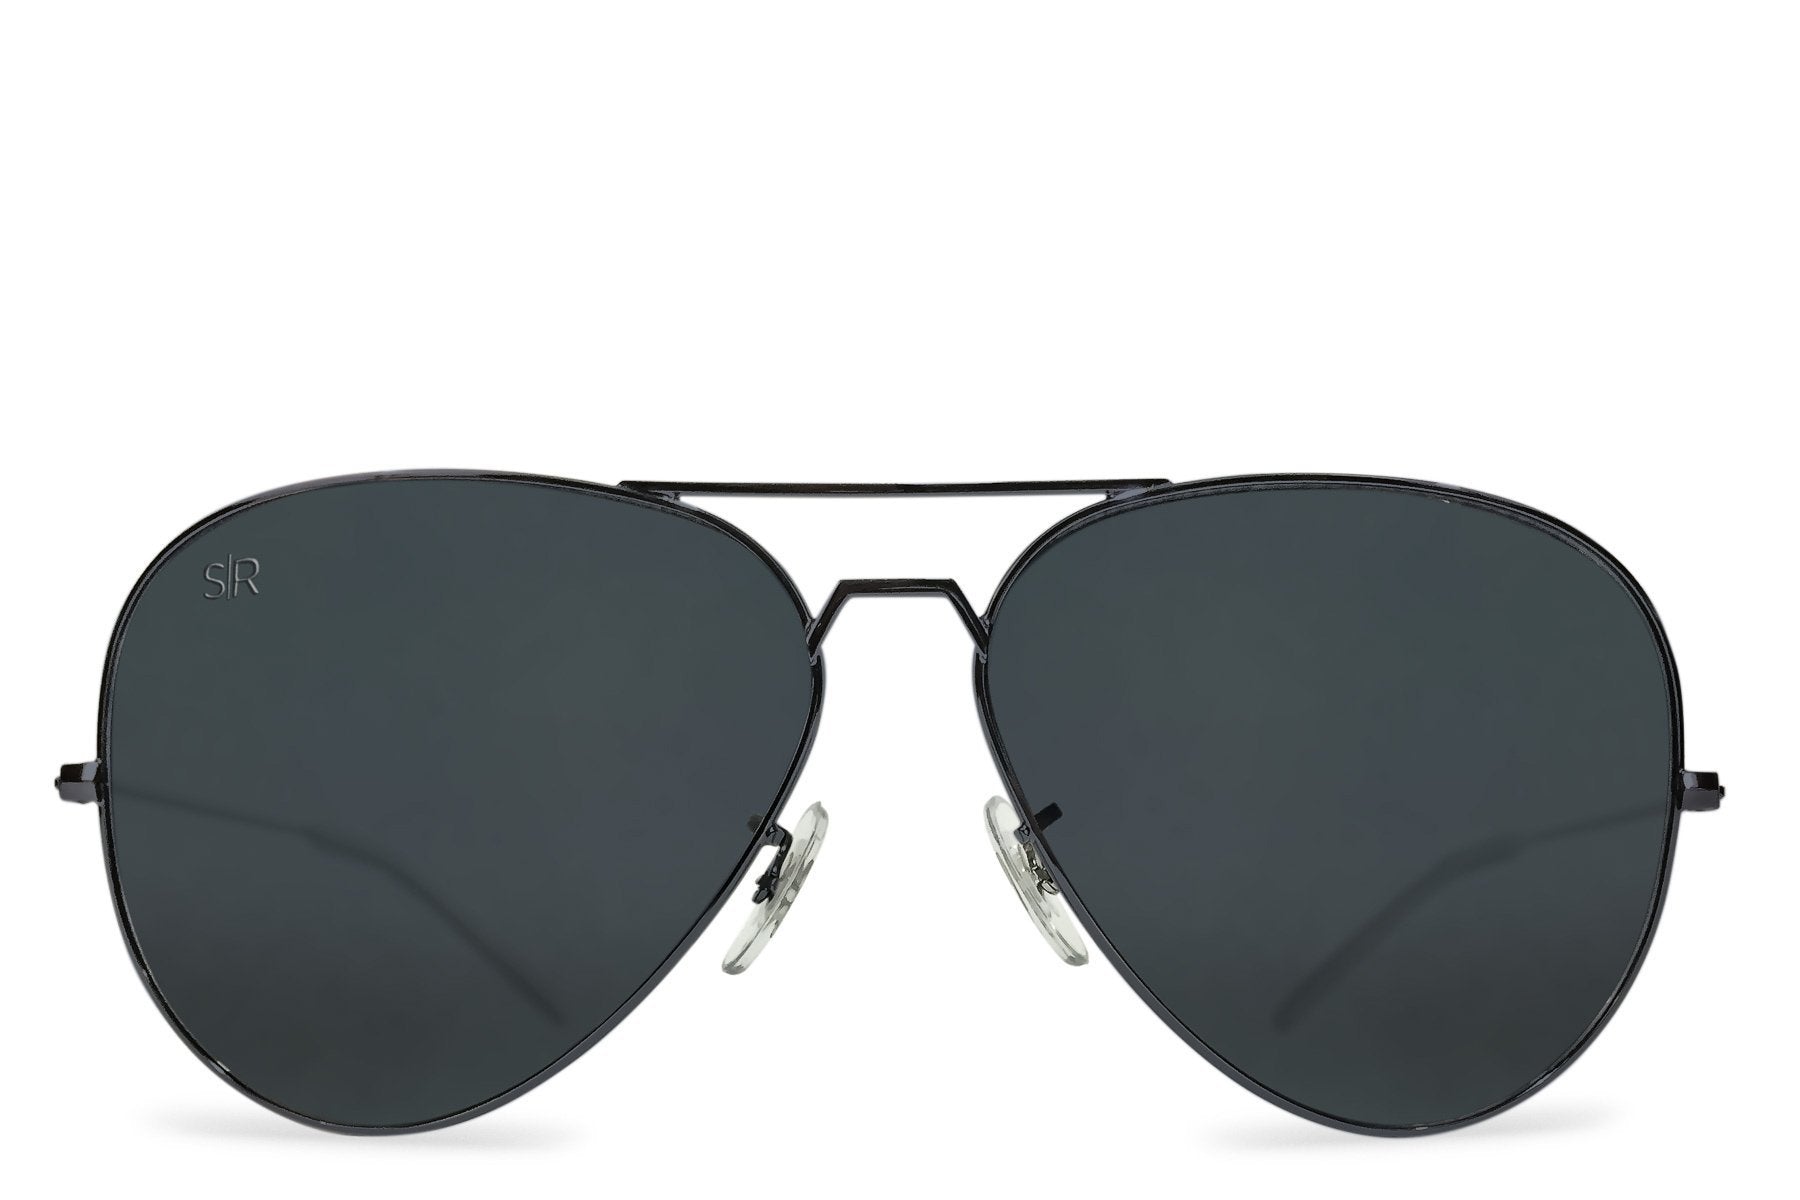 Virgil Matte Black - Prescription Sunglasses by BonLook